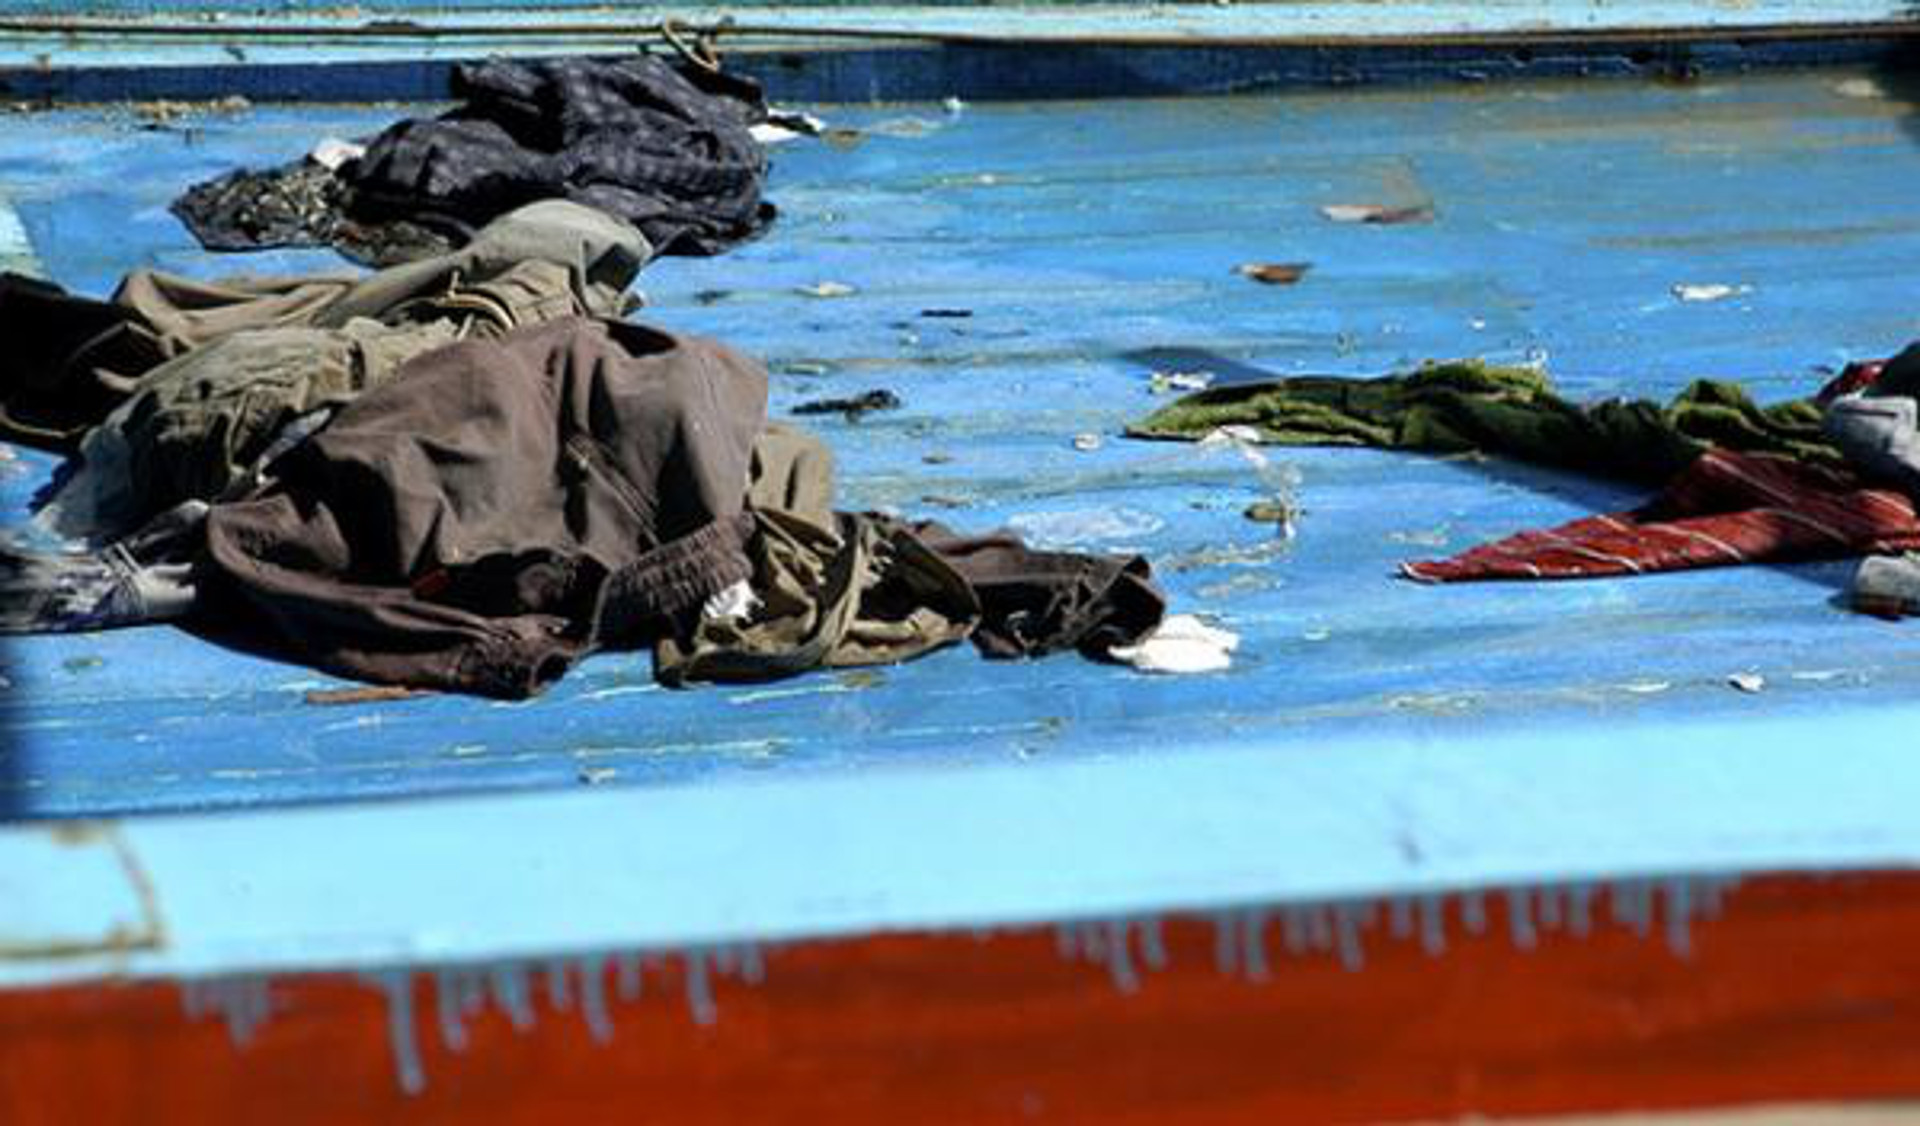 des corps de migrants échoués à Lampedusa
Photo: flickr/noborder/cc
